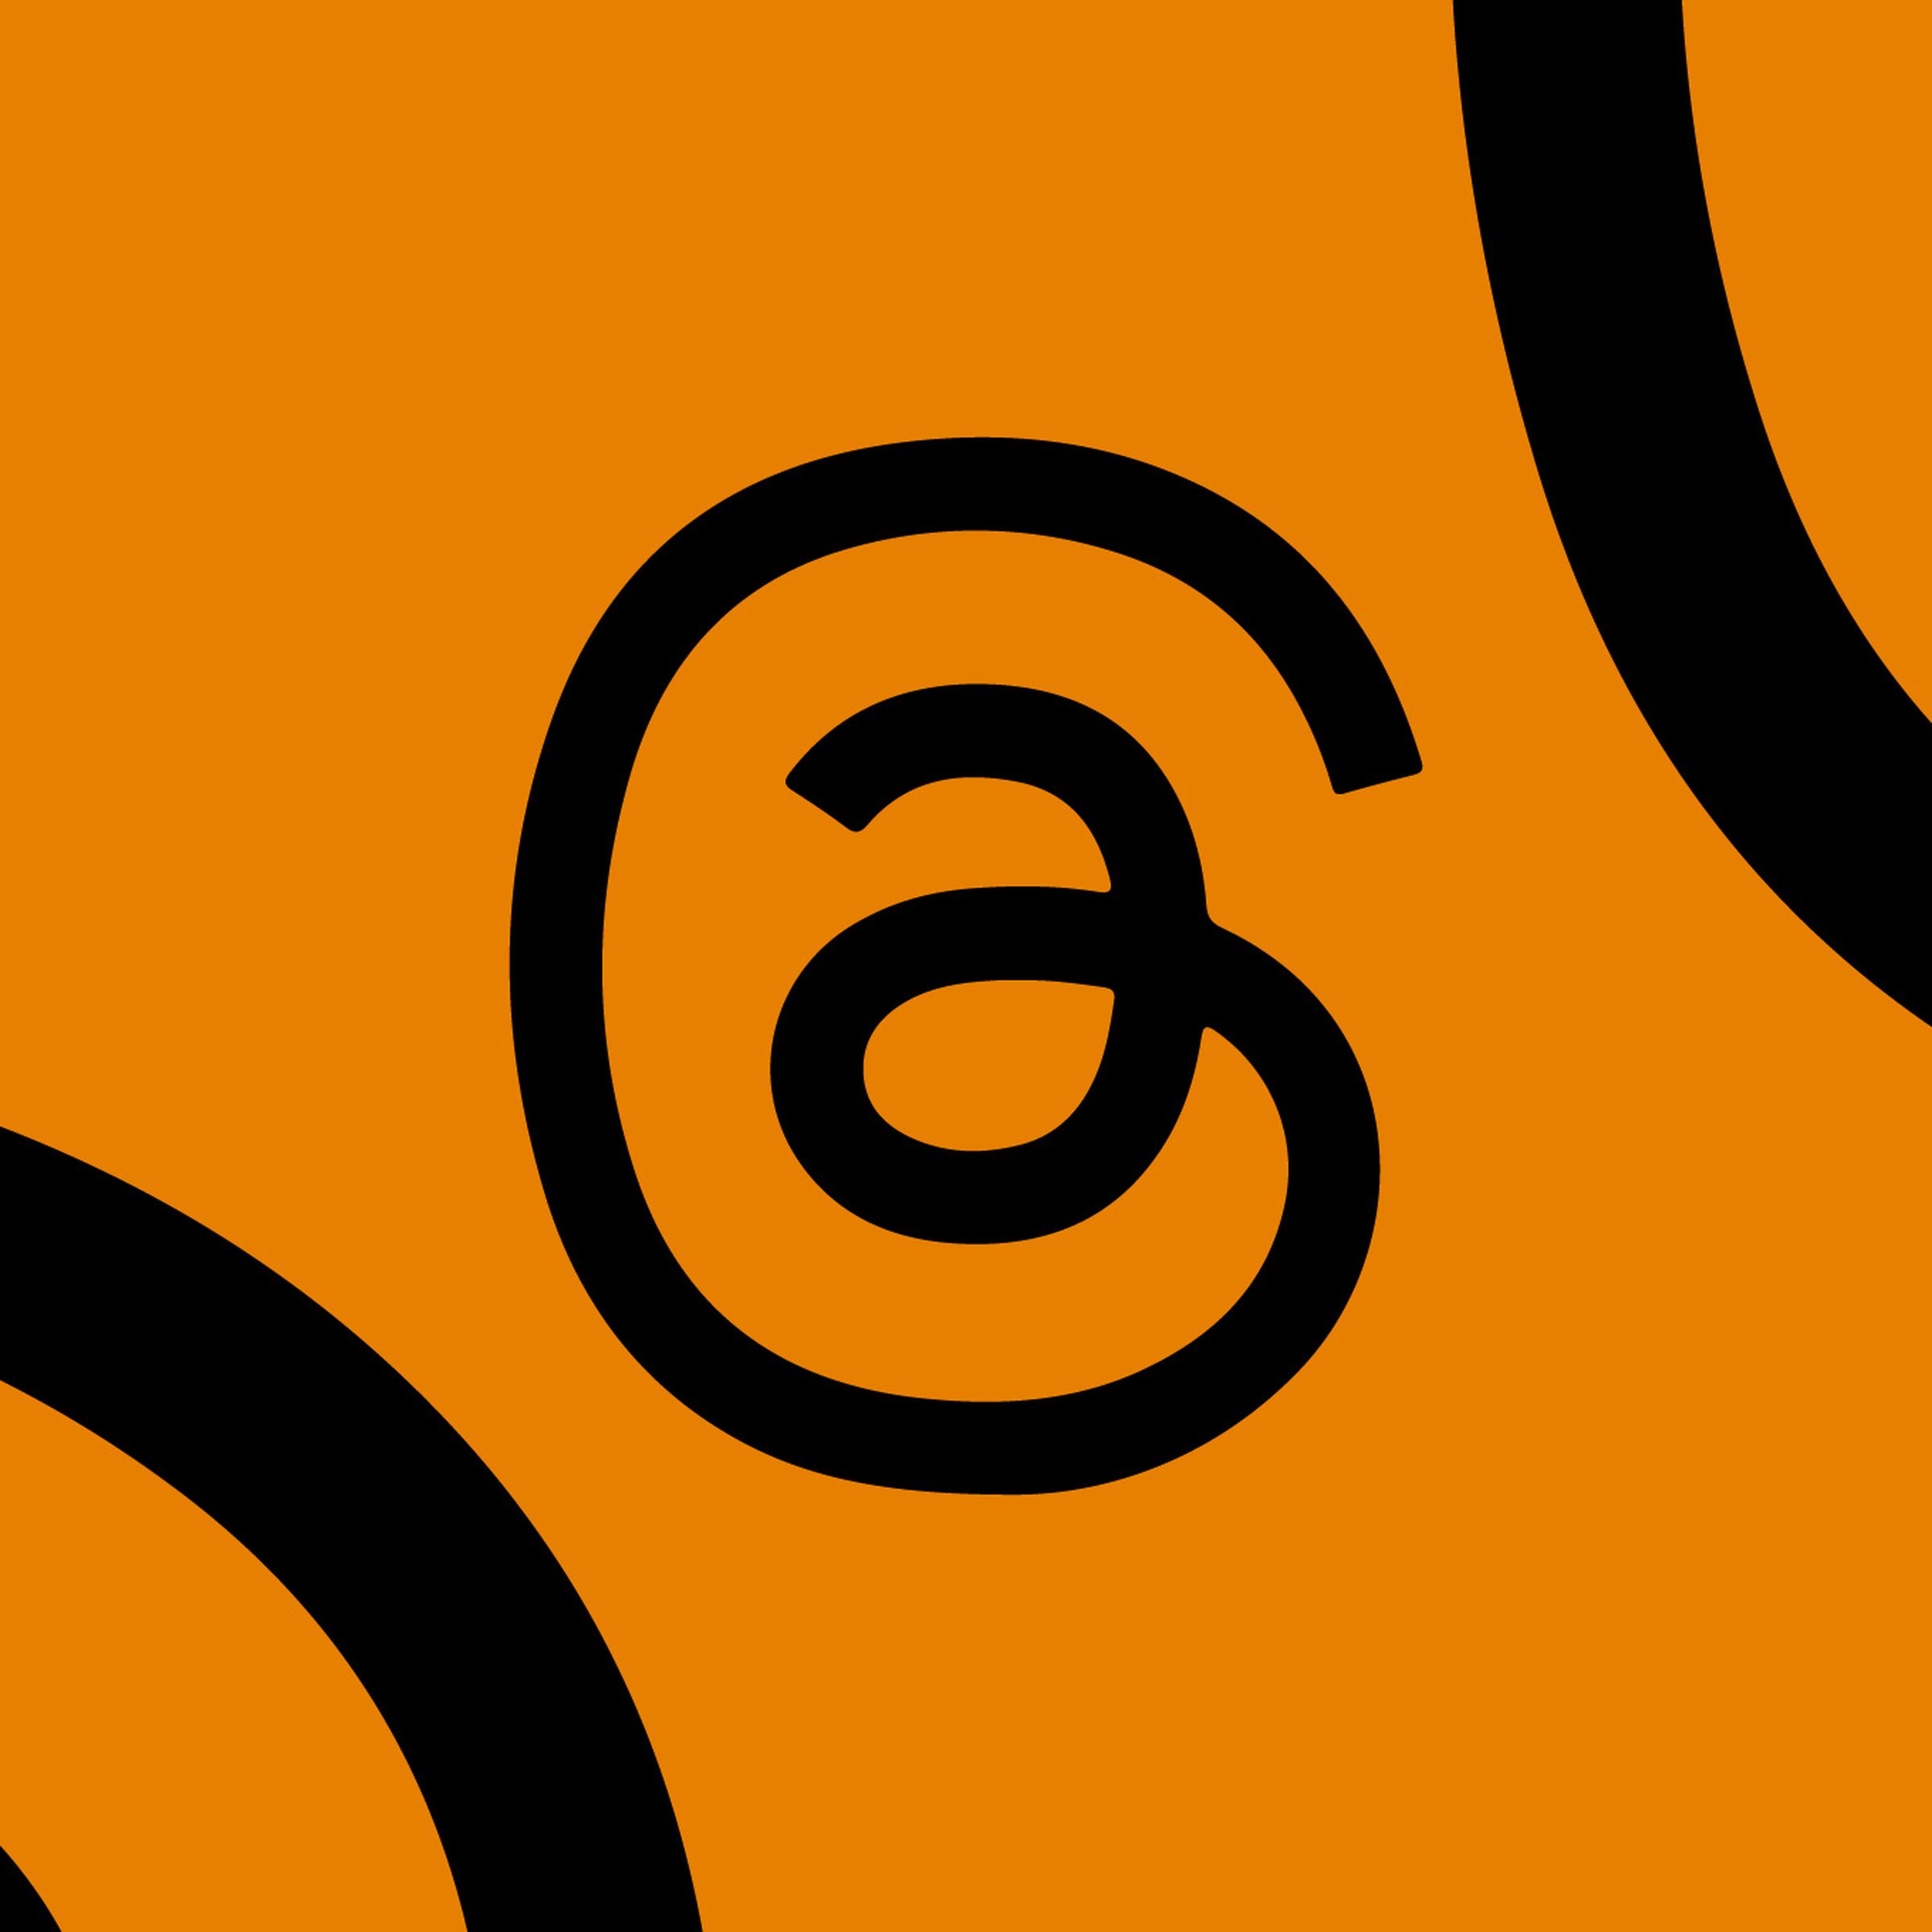 Illustration of the Threads app logo